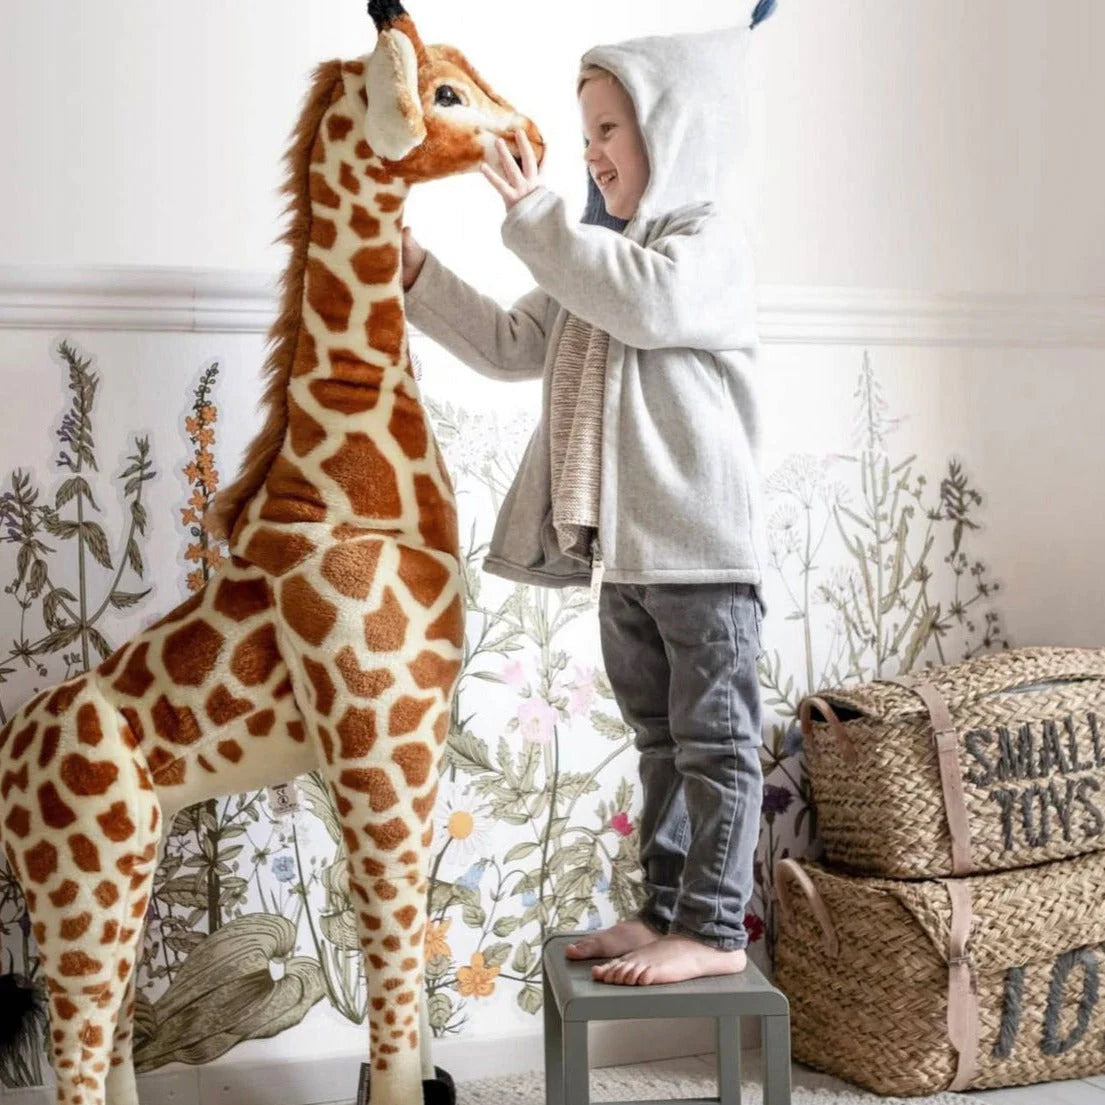 Casa infantil: peluche jirafa de pie 135 cm